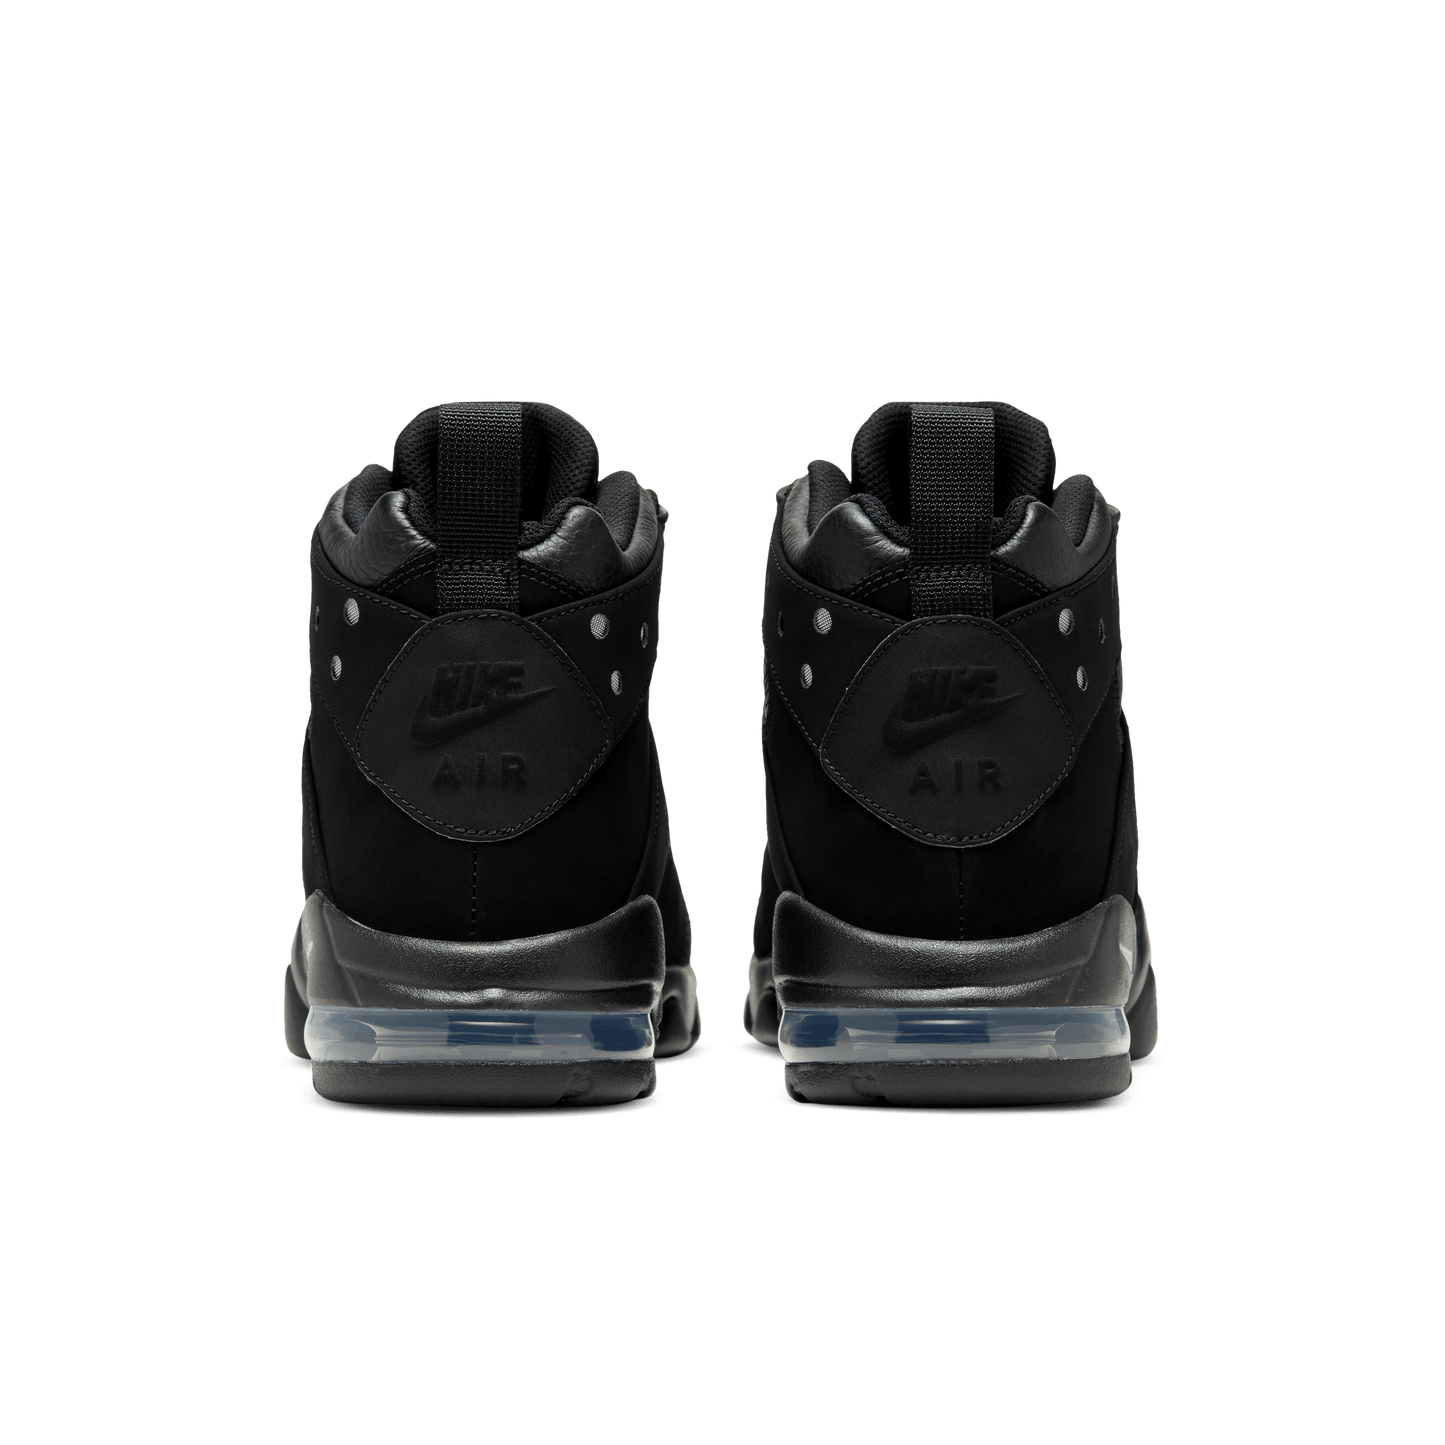 Charles Barkley Nike Air Max2 CB '94 Black Charcoal